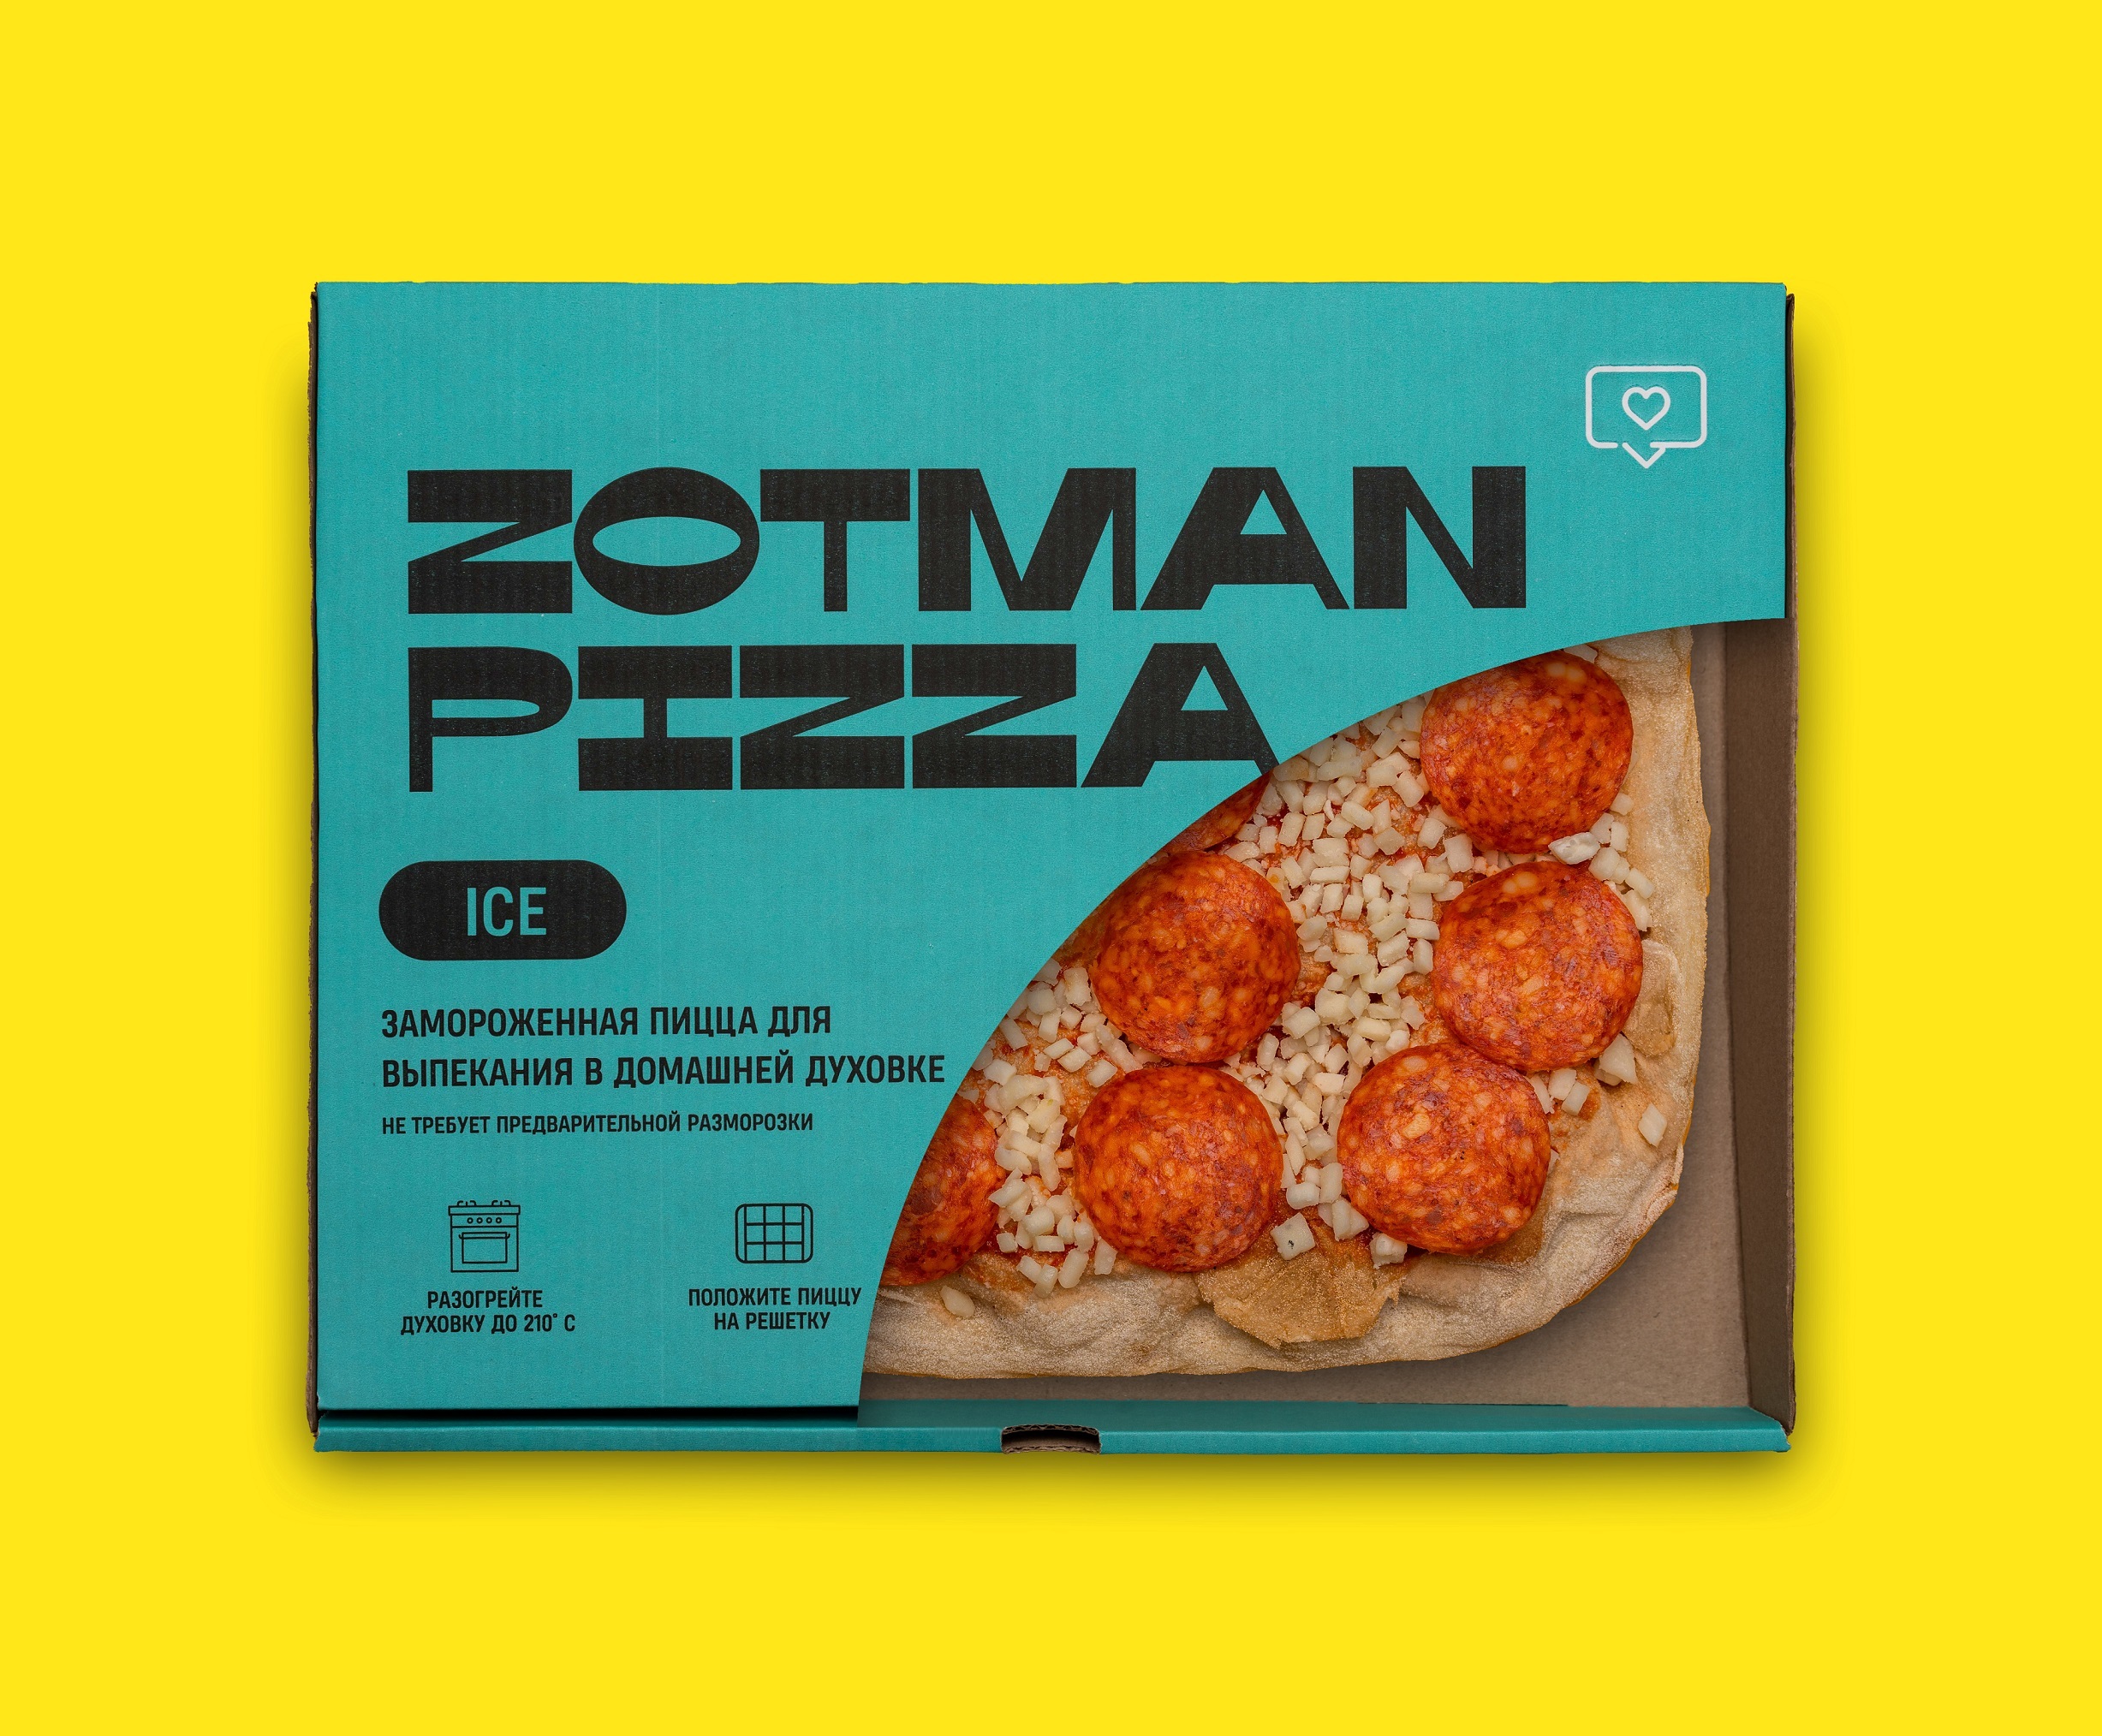 Пицца заморозка. Пицца Зотман замороженная. Пицца Zotman пепперони. Пицца готовая замороженная. Зотман пицца коробка.